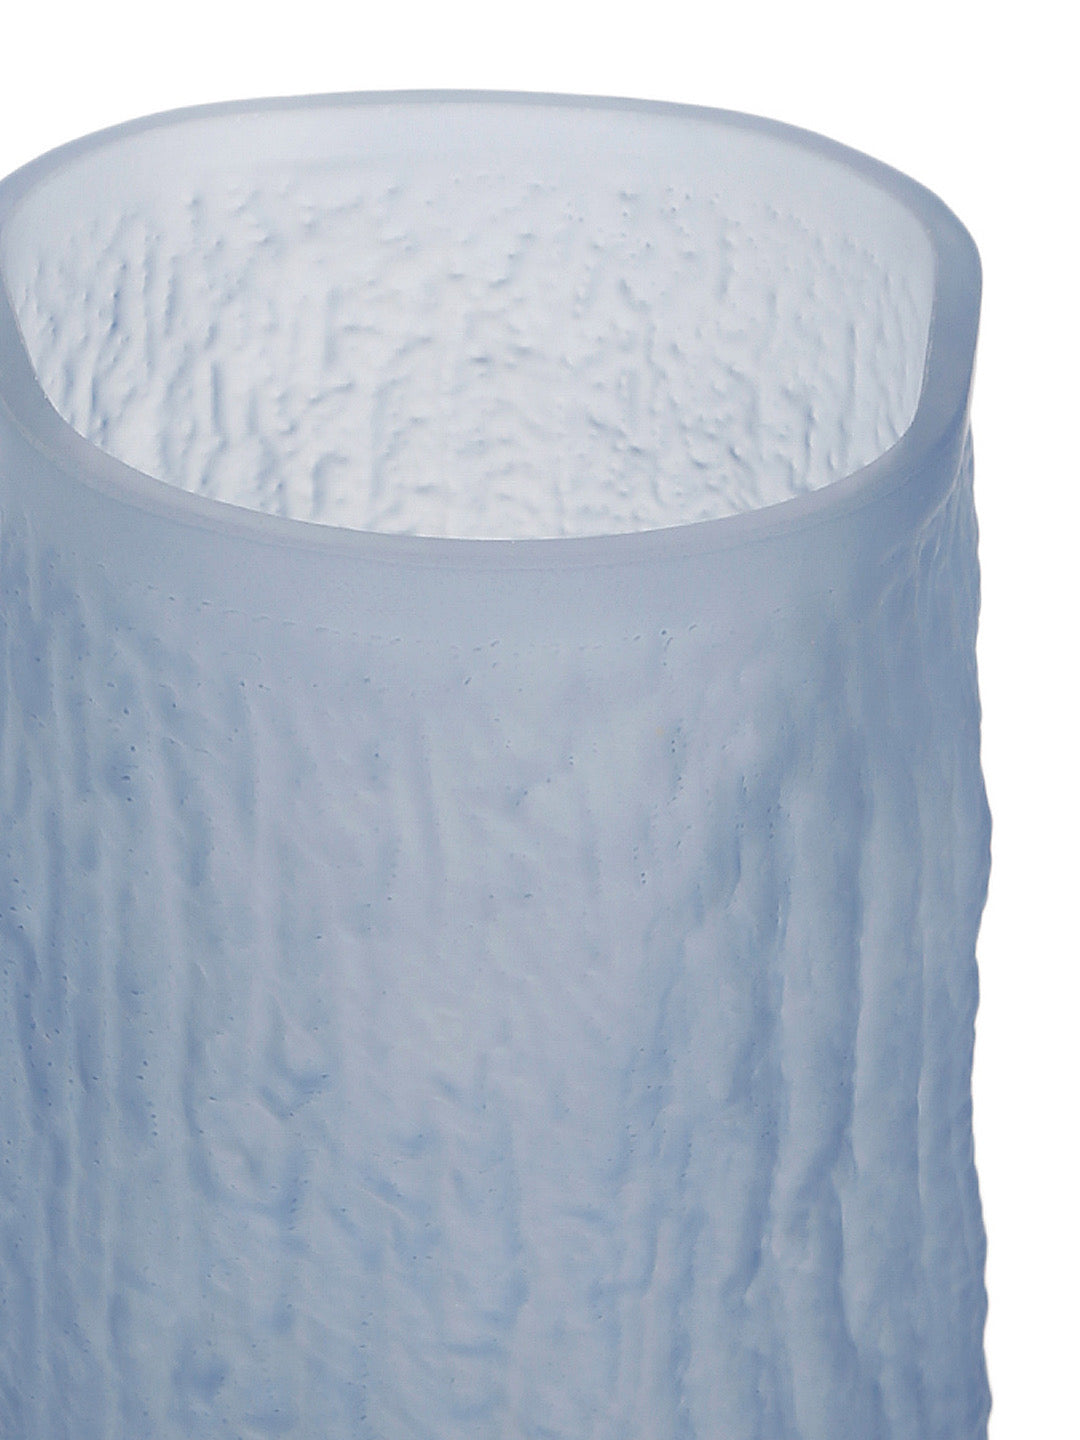 Blue Cylindrical Glass Vase - Default Title (VAS21042)